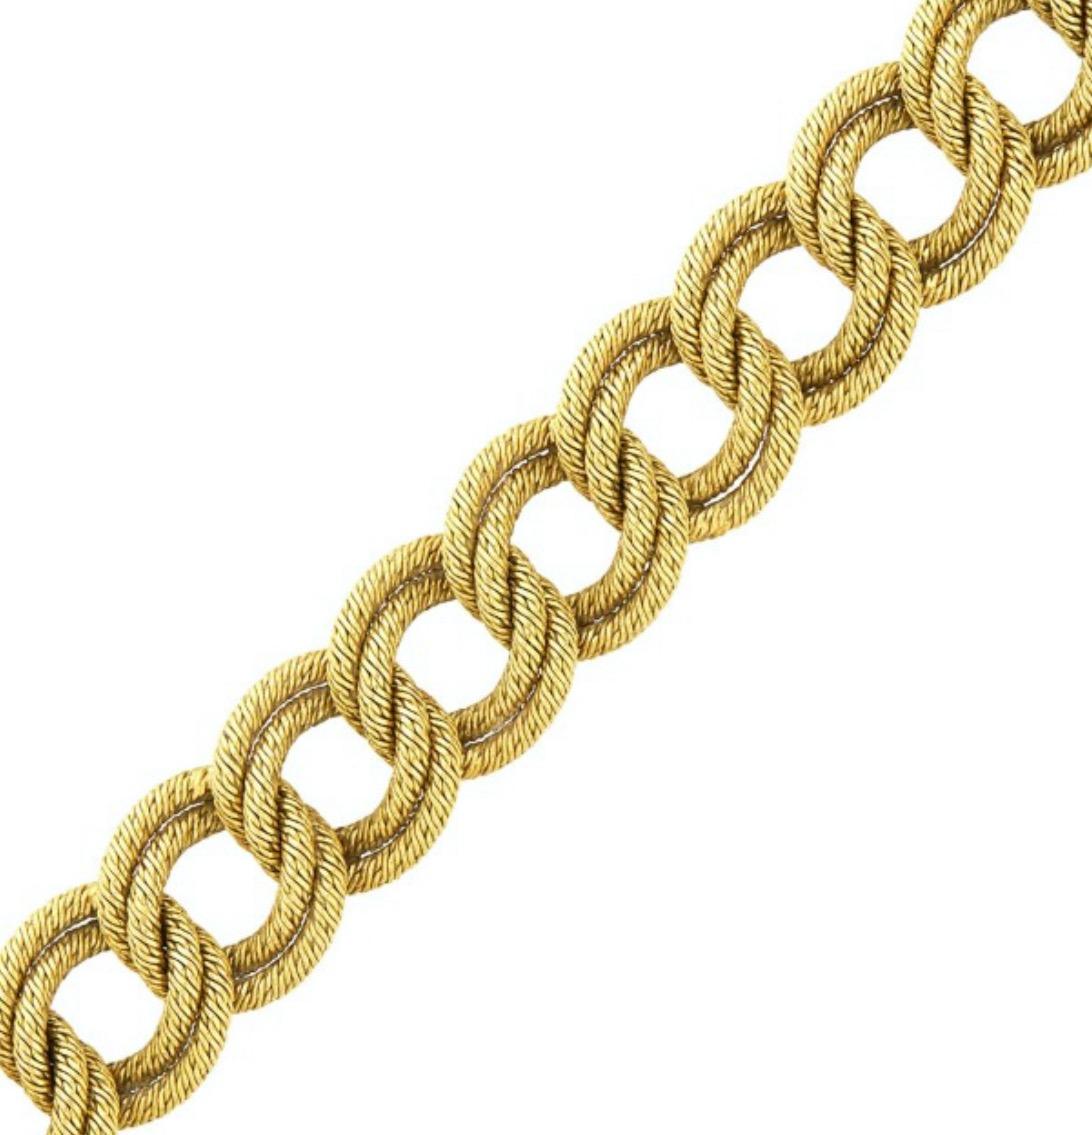 tiffany curb link bracelet